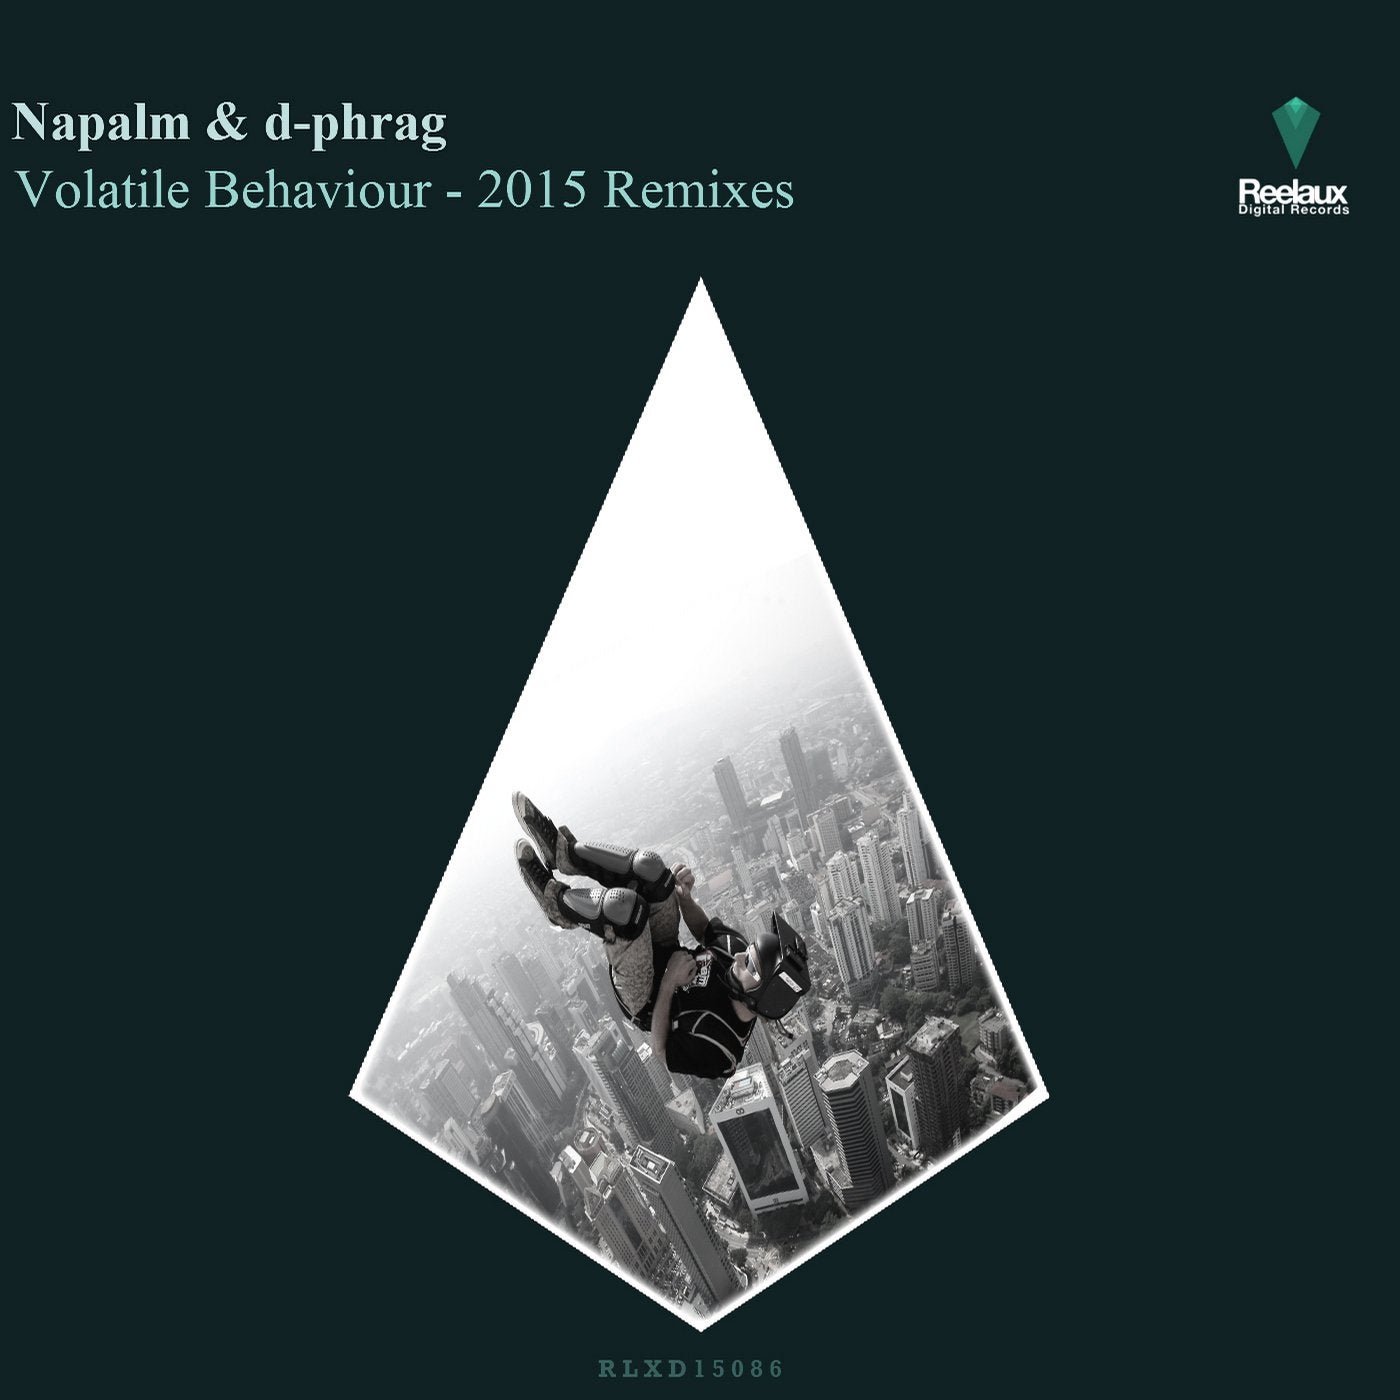 Volatile Behaviour - 2015 Remixes